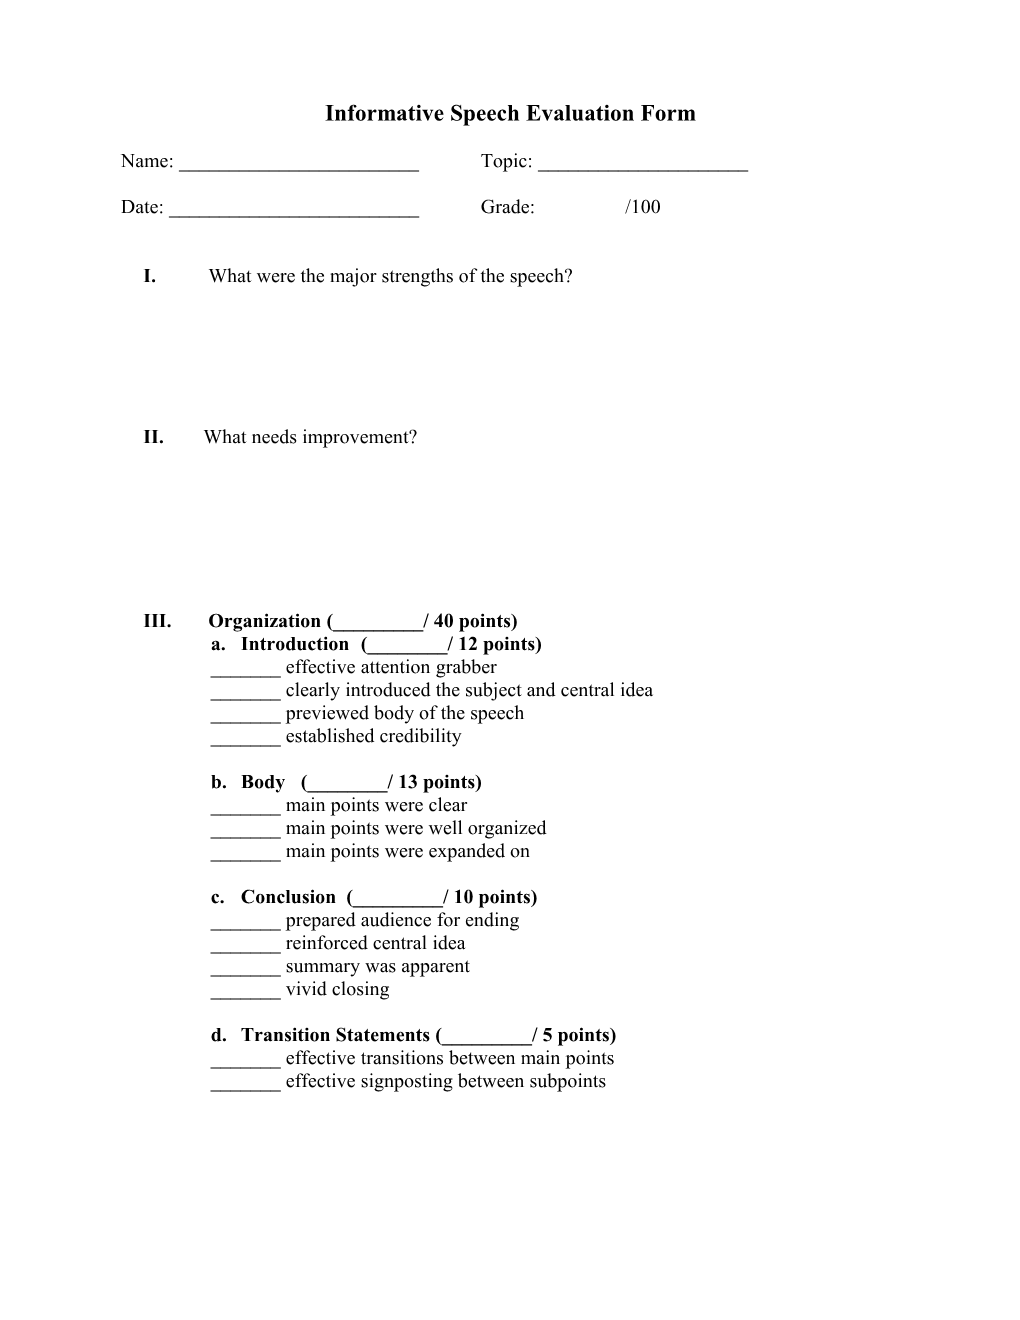 Informative Speech Evaluation Form